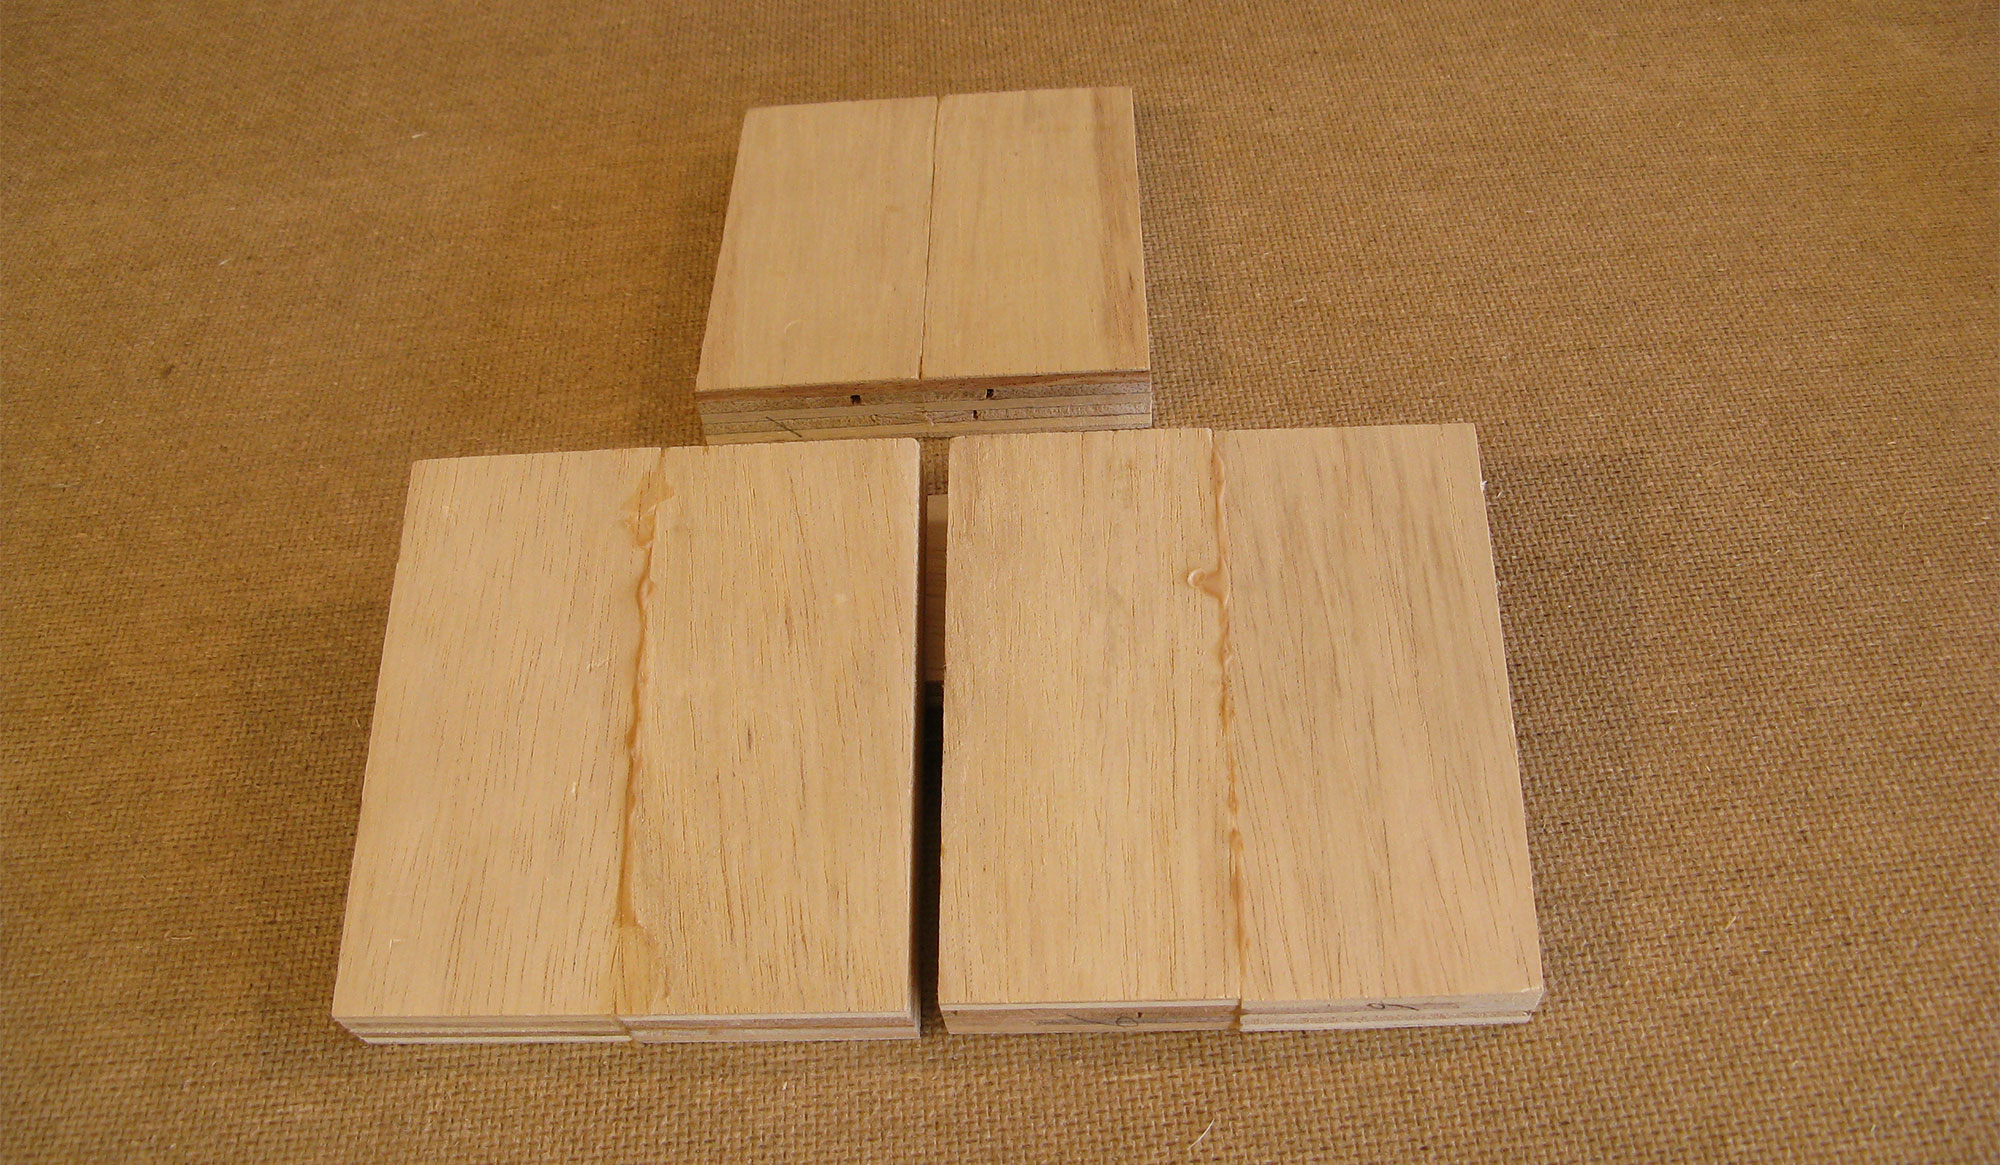 Three glued wooden blocks.